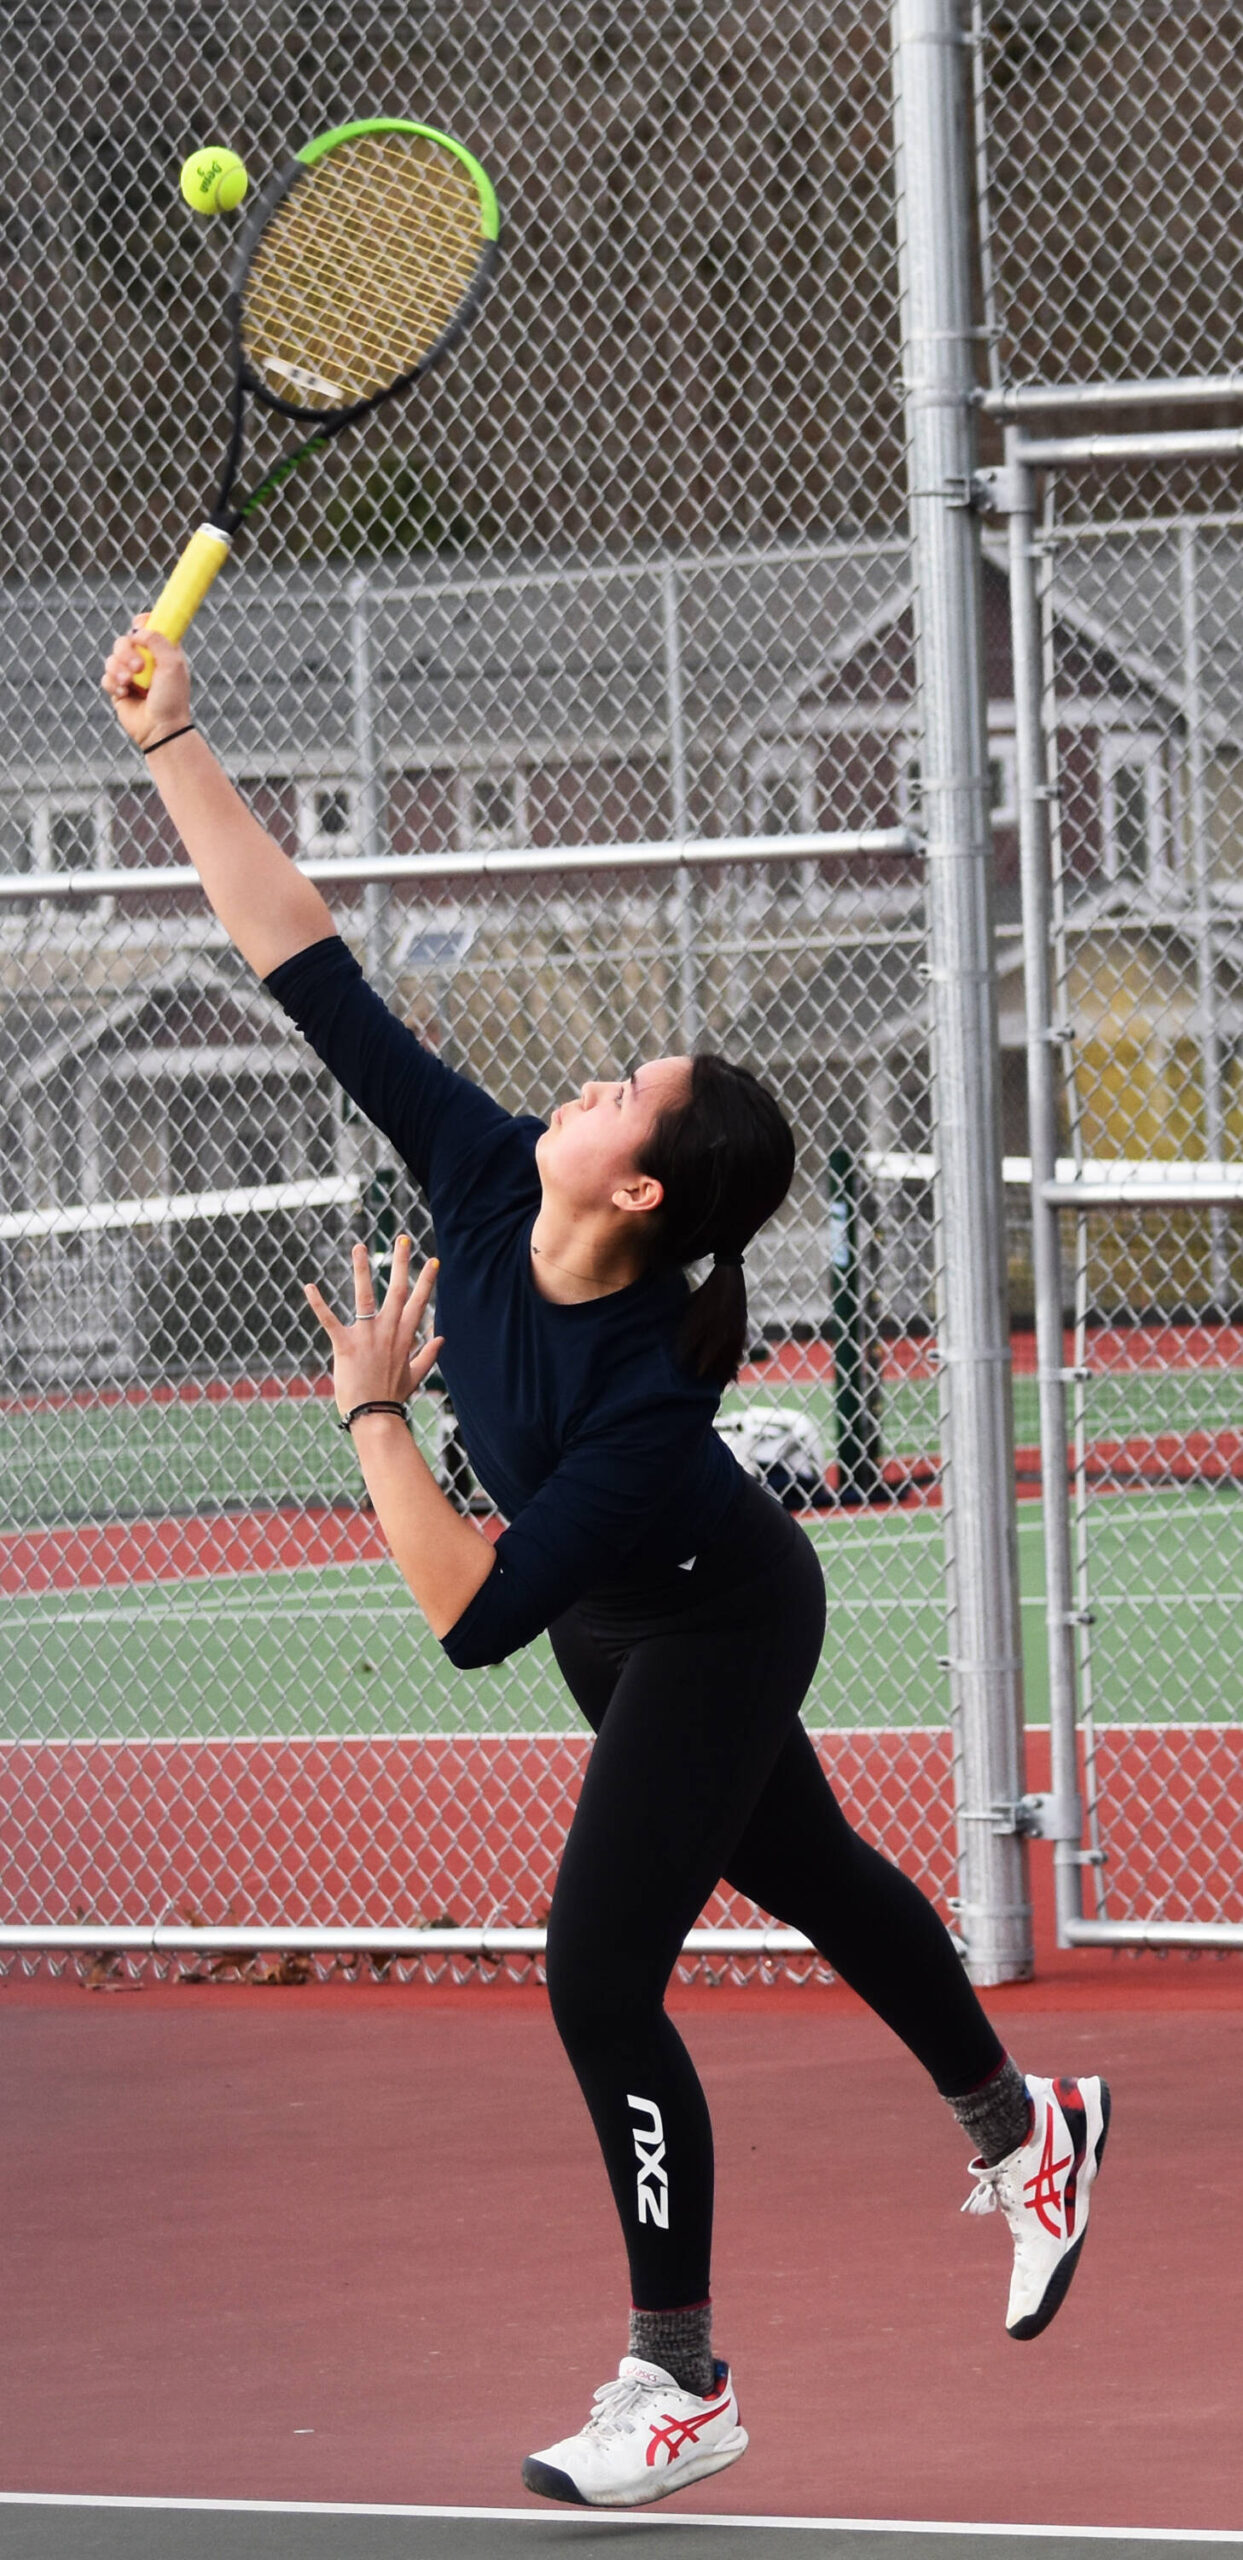 Bainbridge’s Izzy Wallin serves the ball to her opponent.